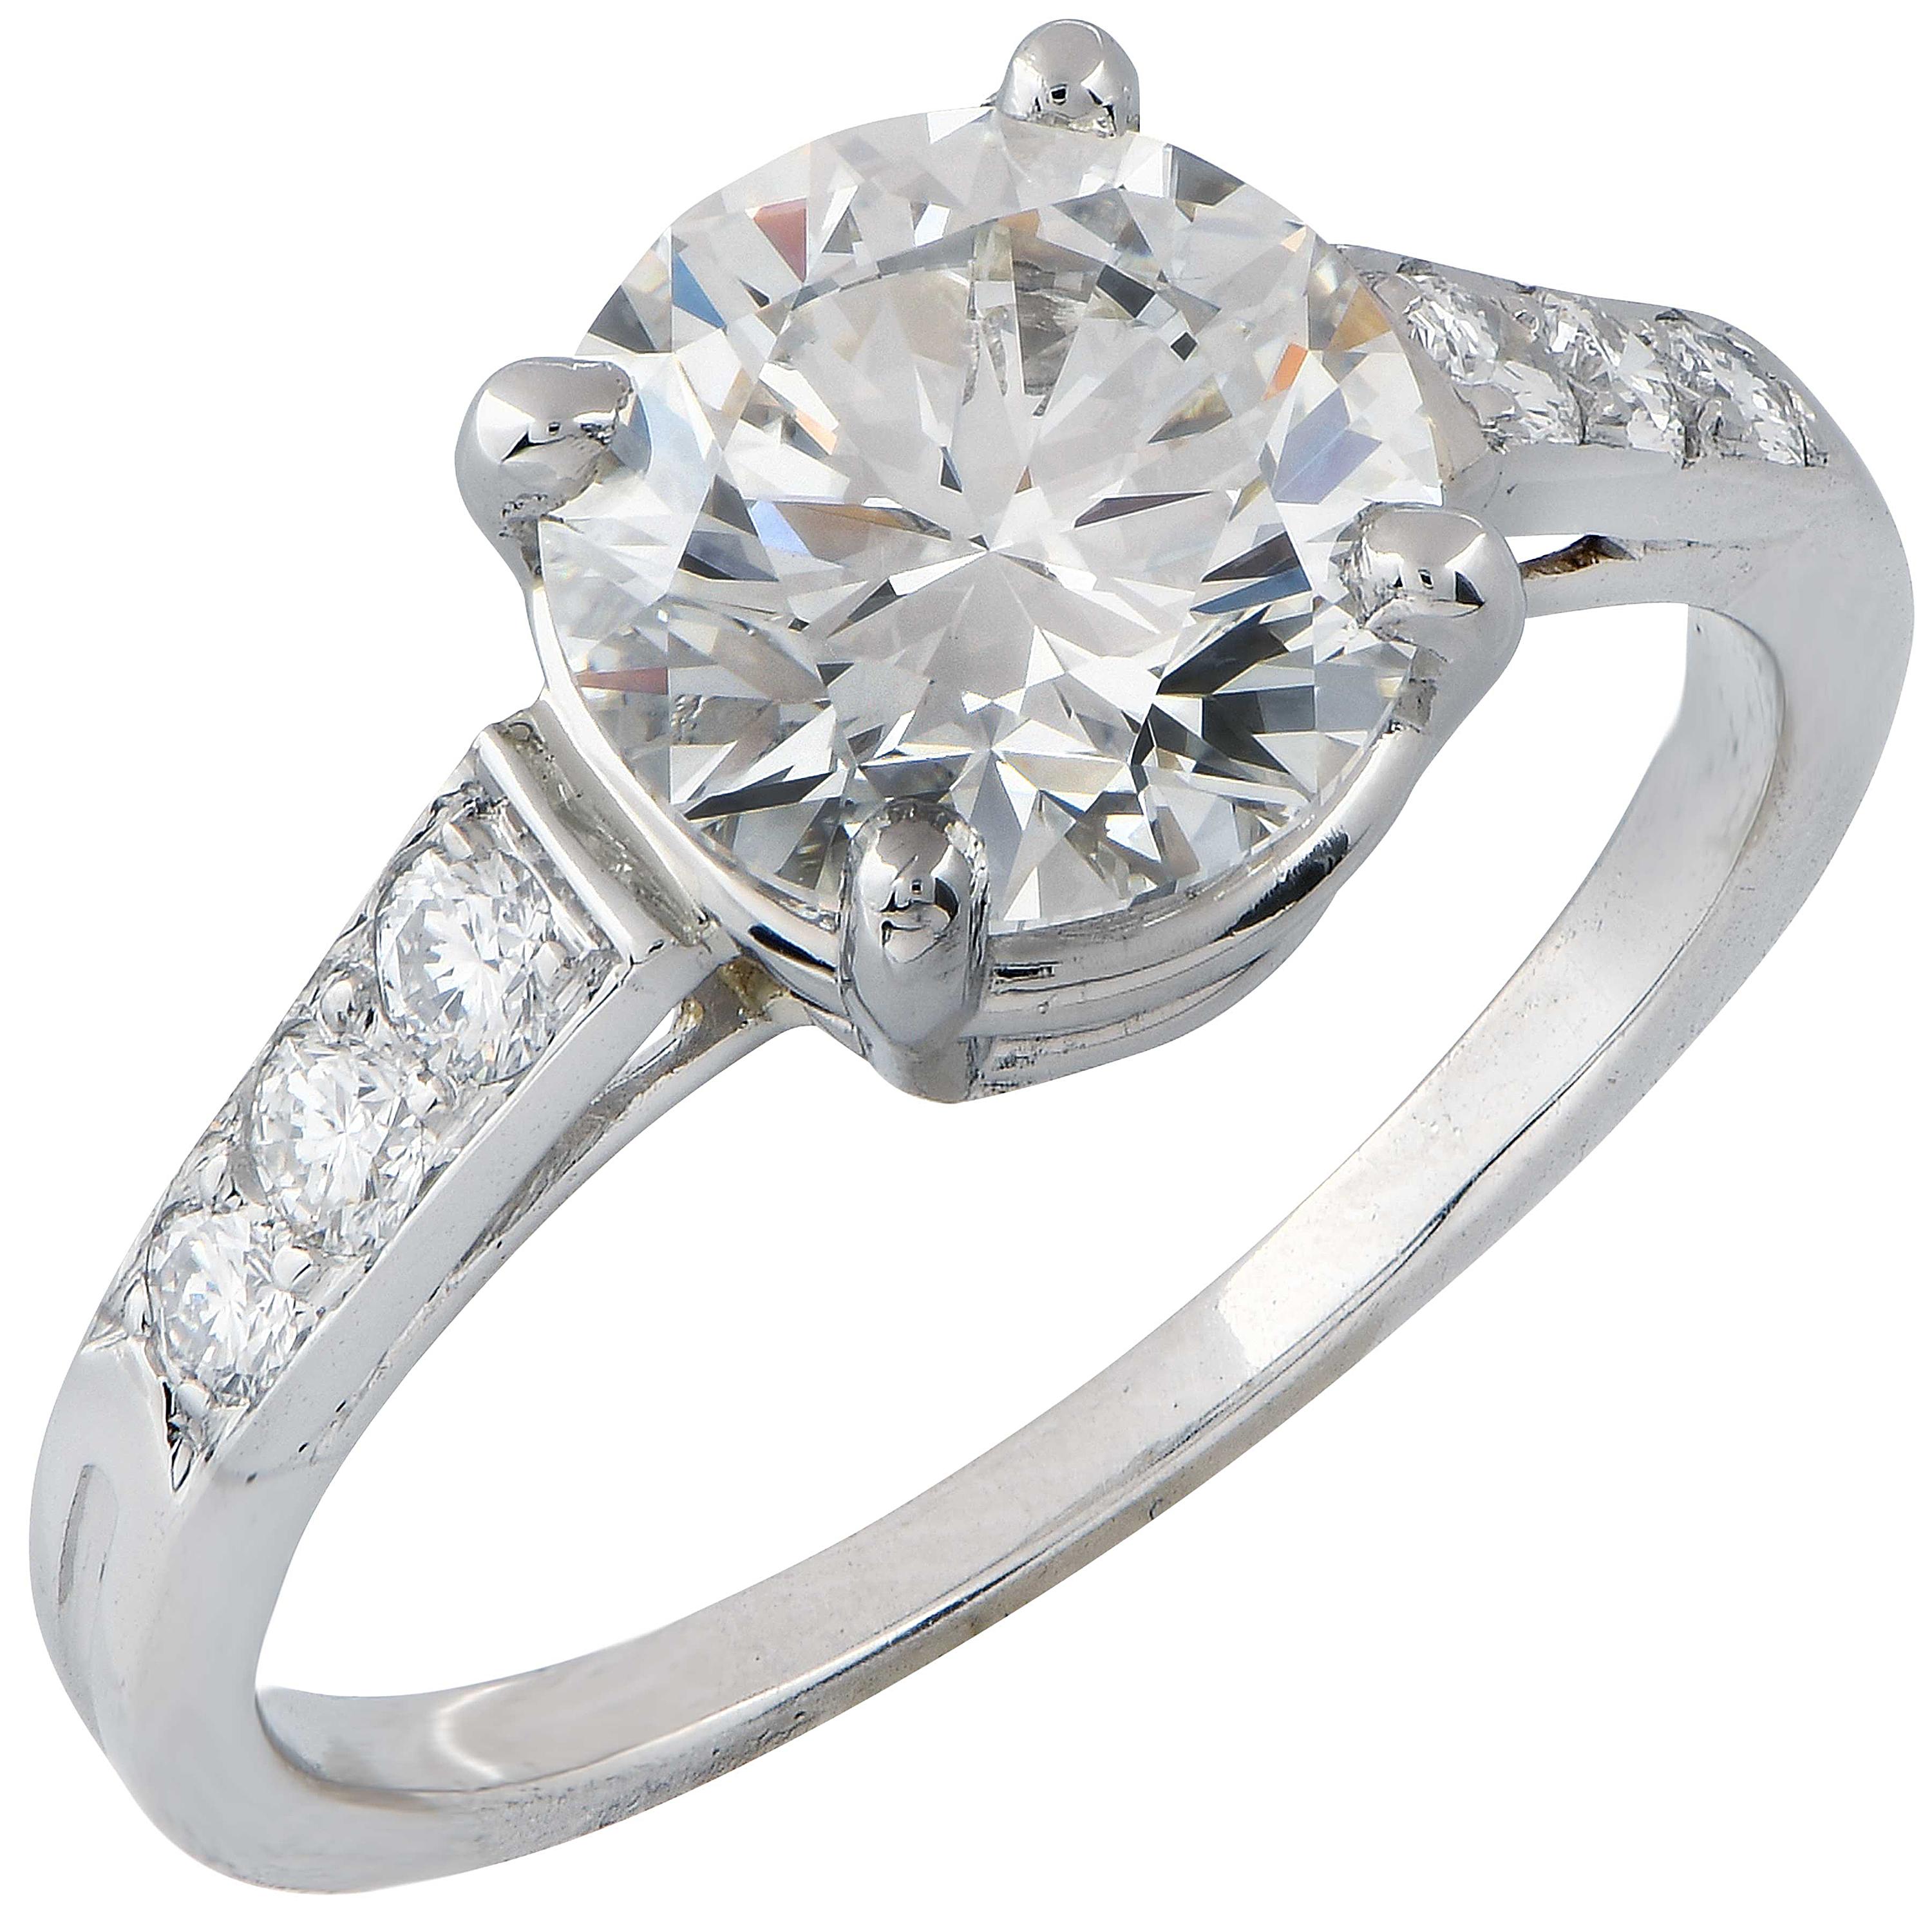 2.13 Carat GIA H / VVS2 Round Brilliant Cut Diamond on Platinum Engagement Ring